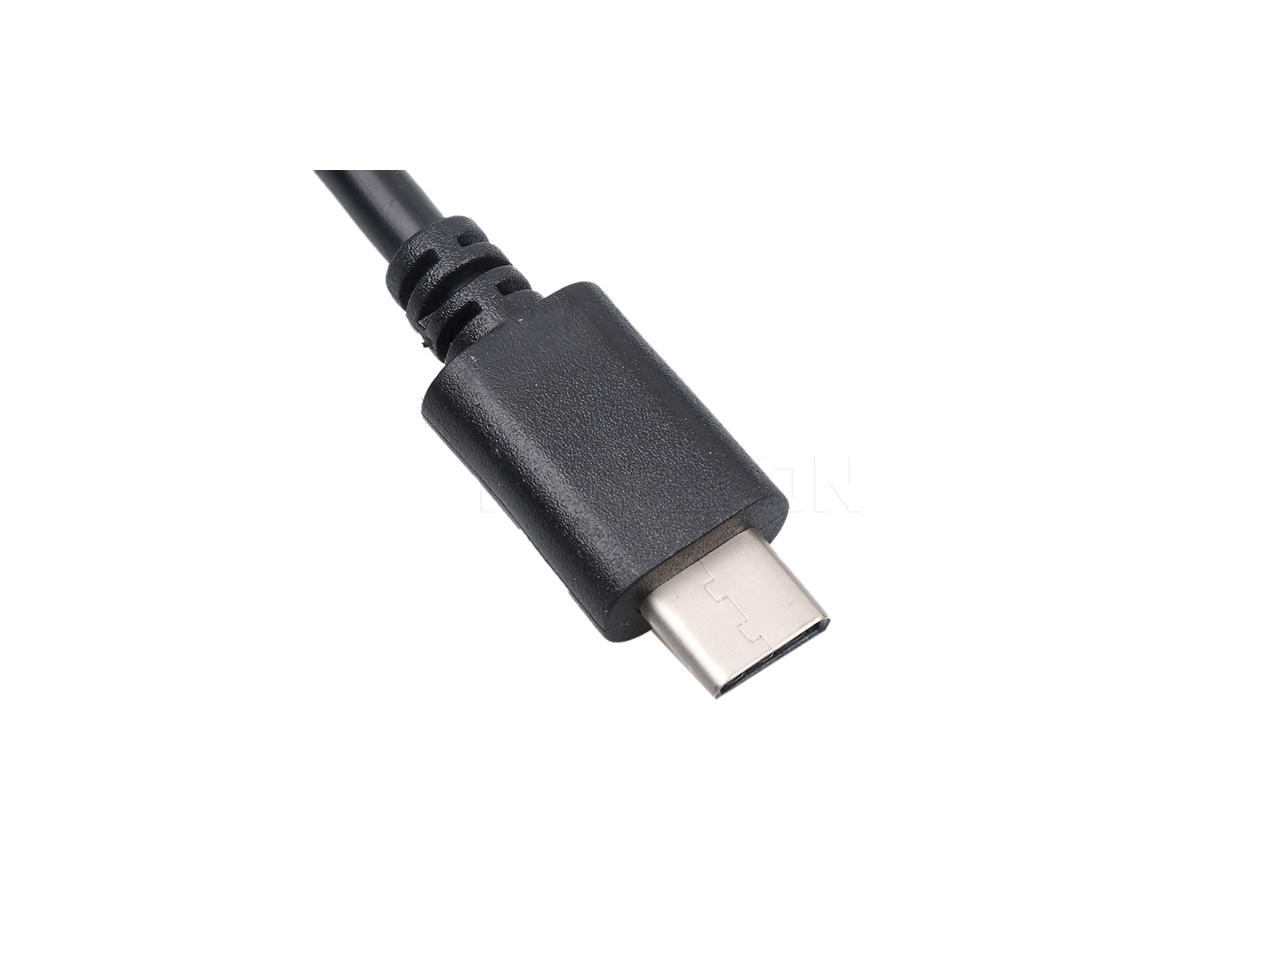 RJ45 network to USB-C 